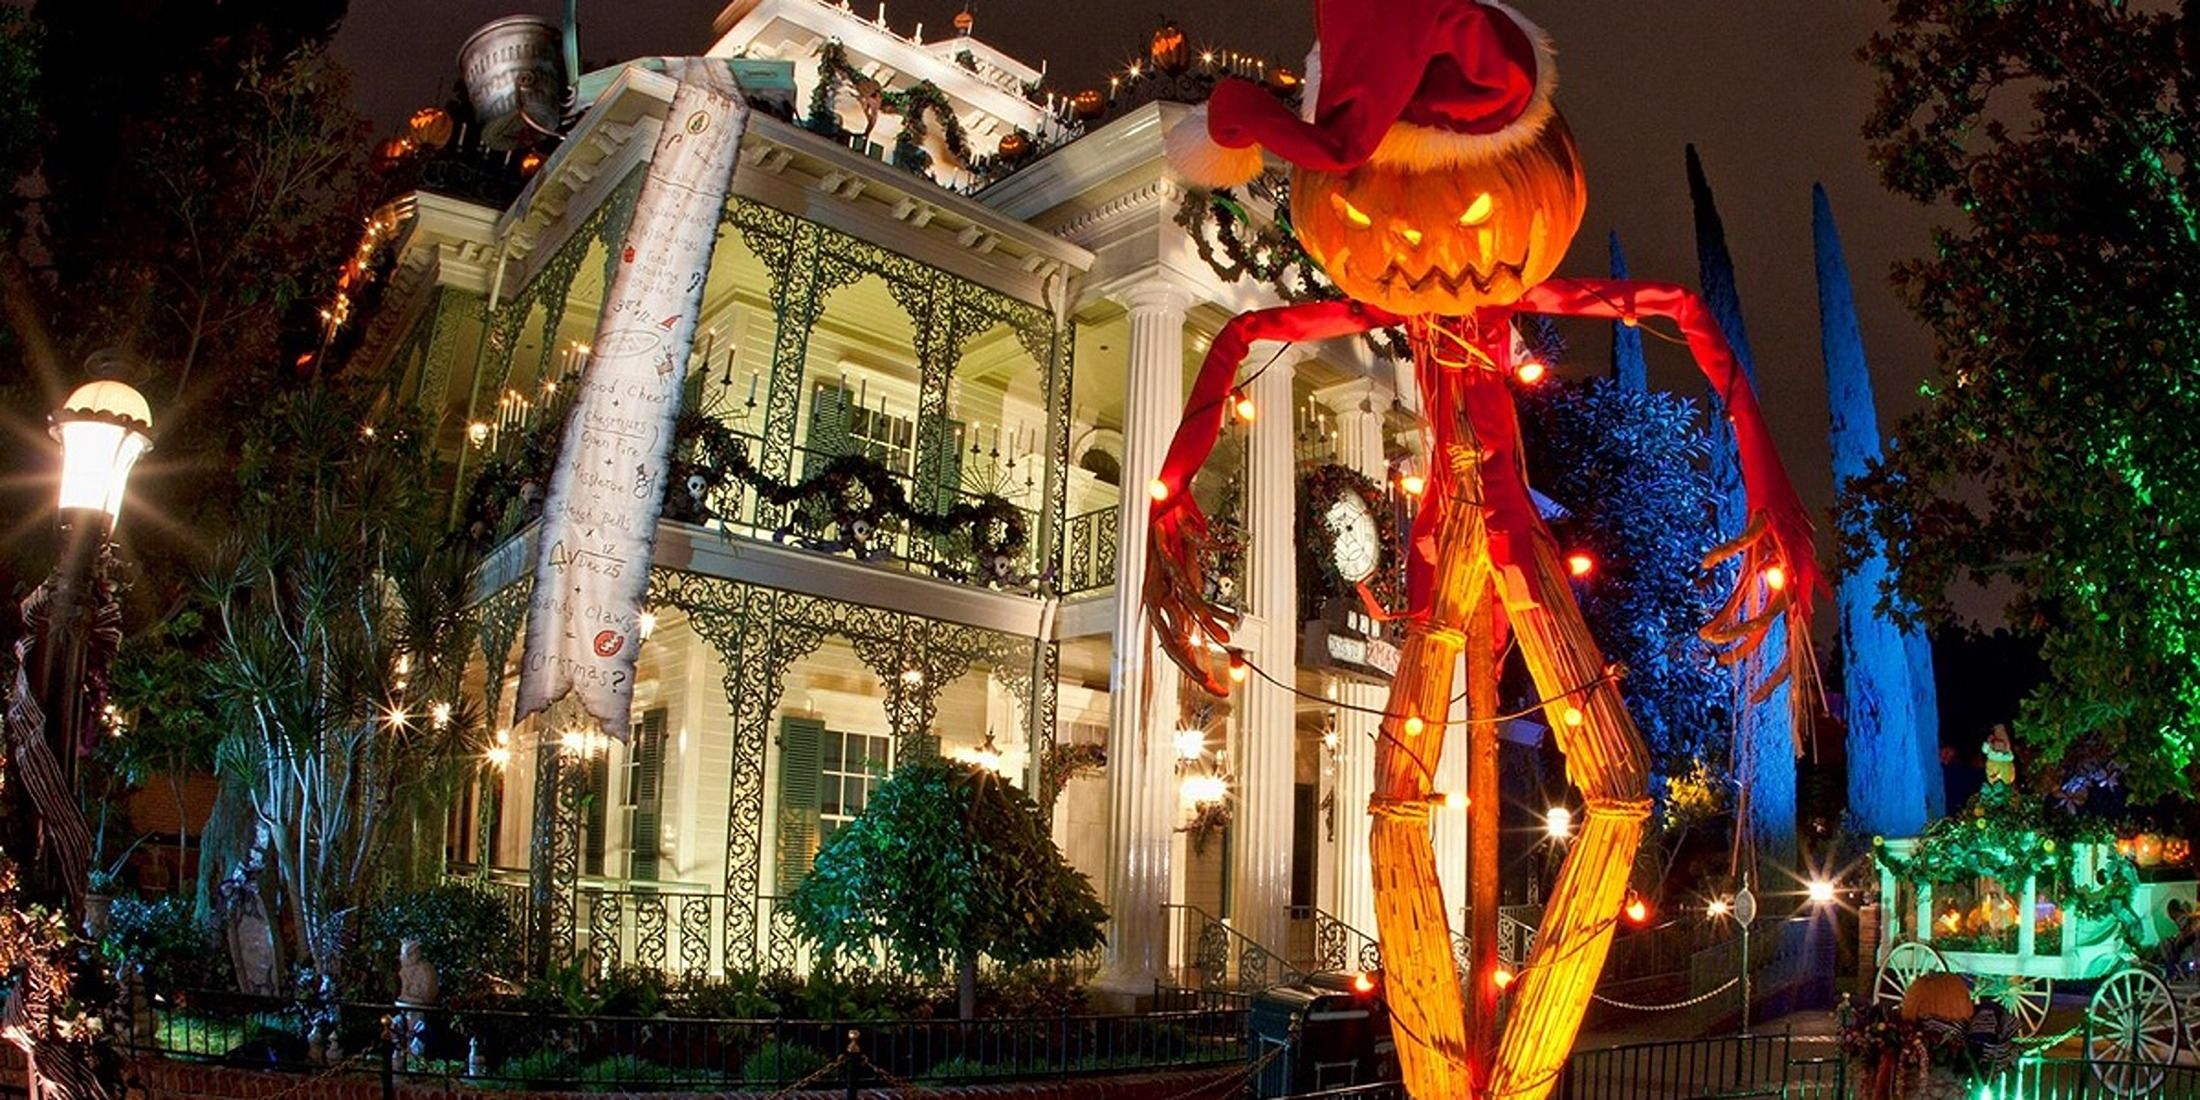 Haunted Mansion Holiday reopens at Disneyland this year